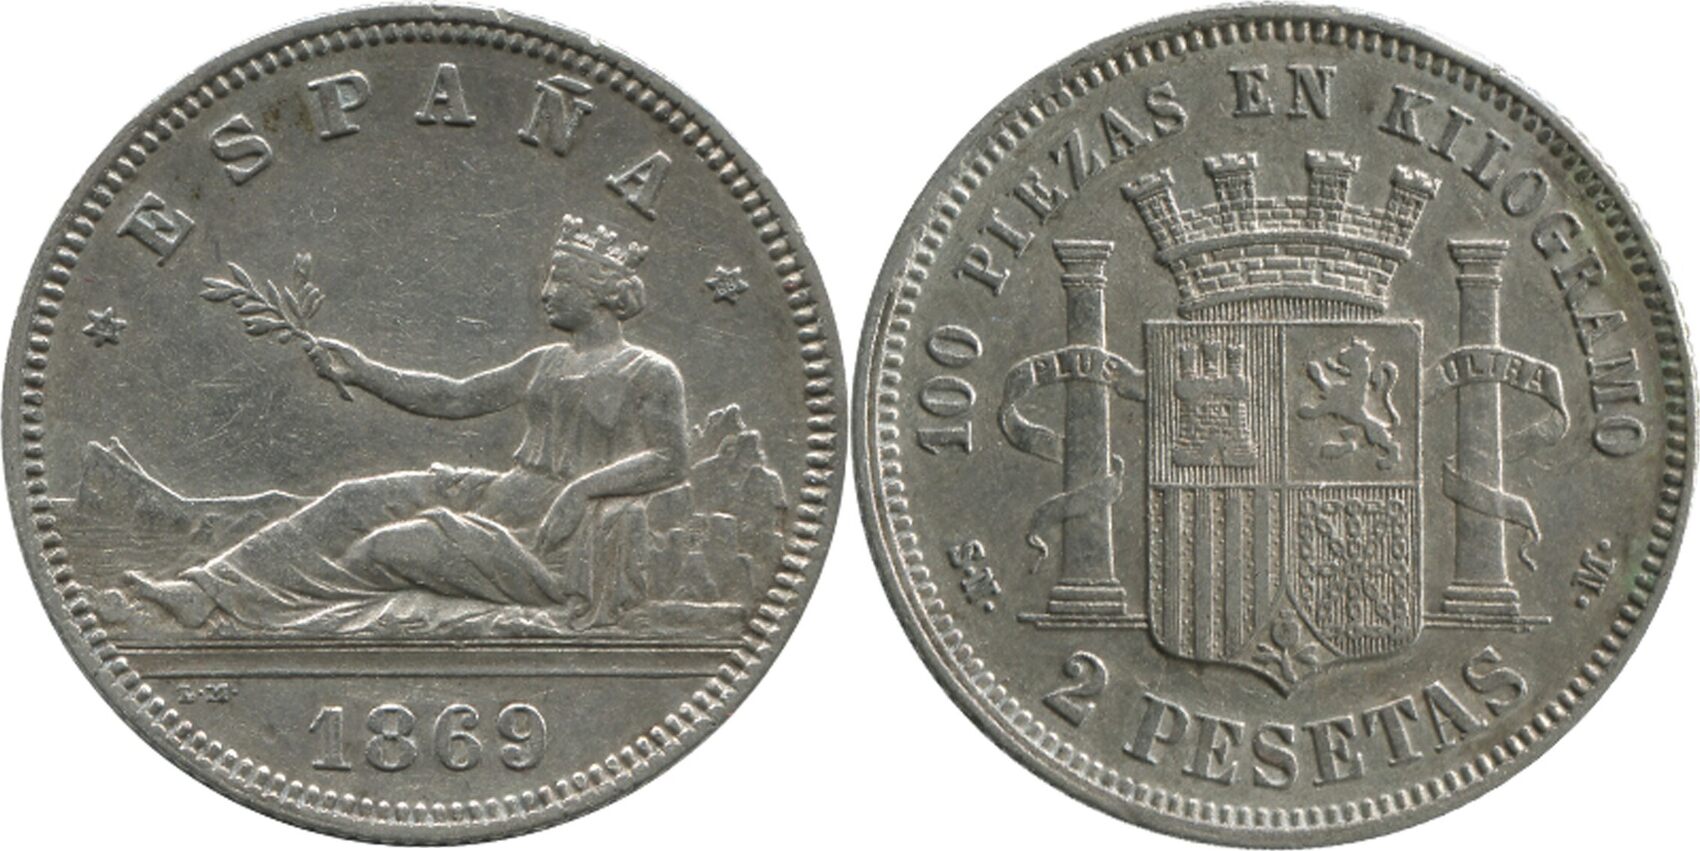 фото монет испании